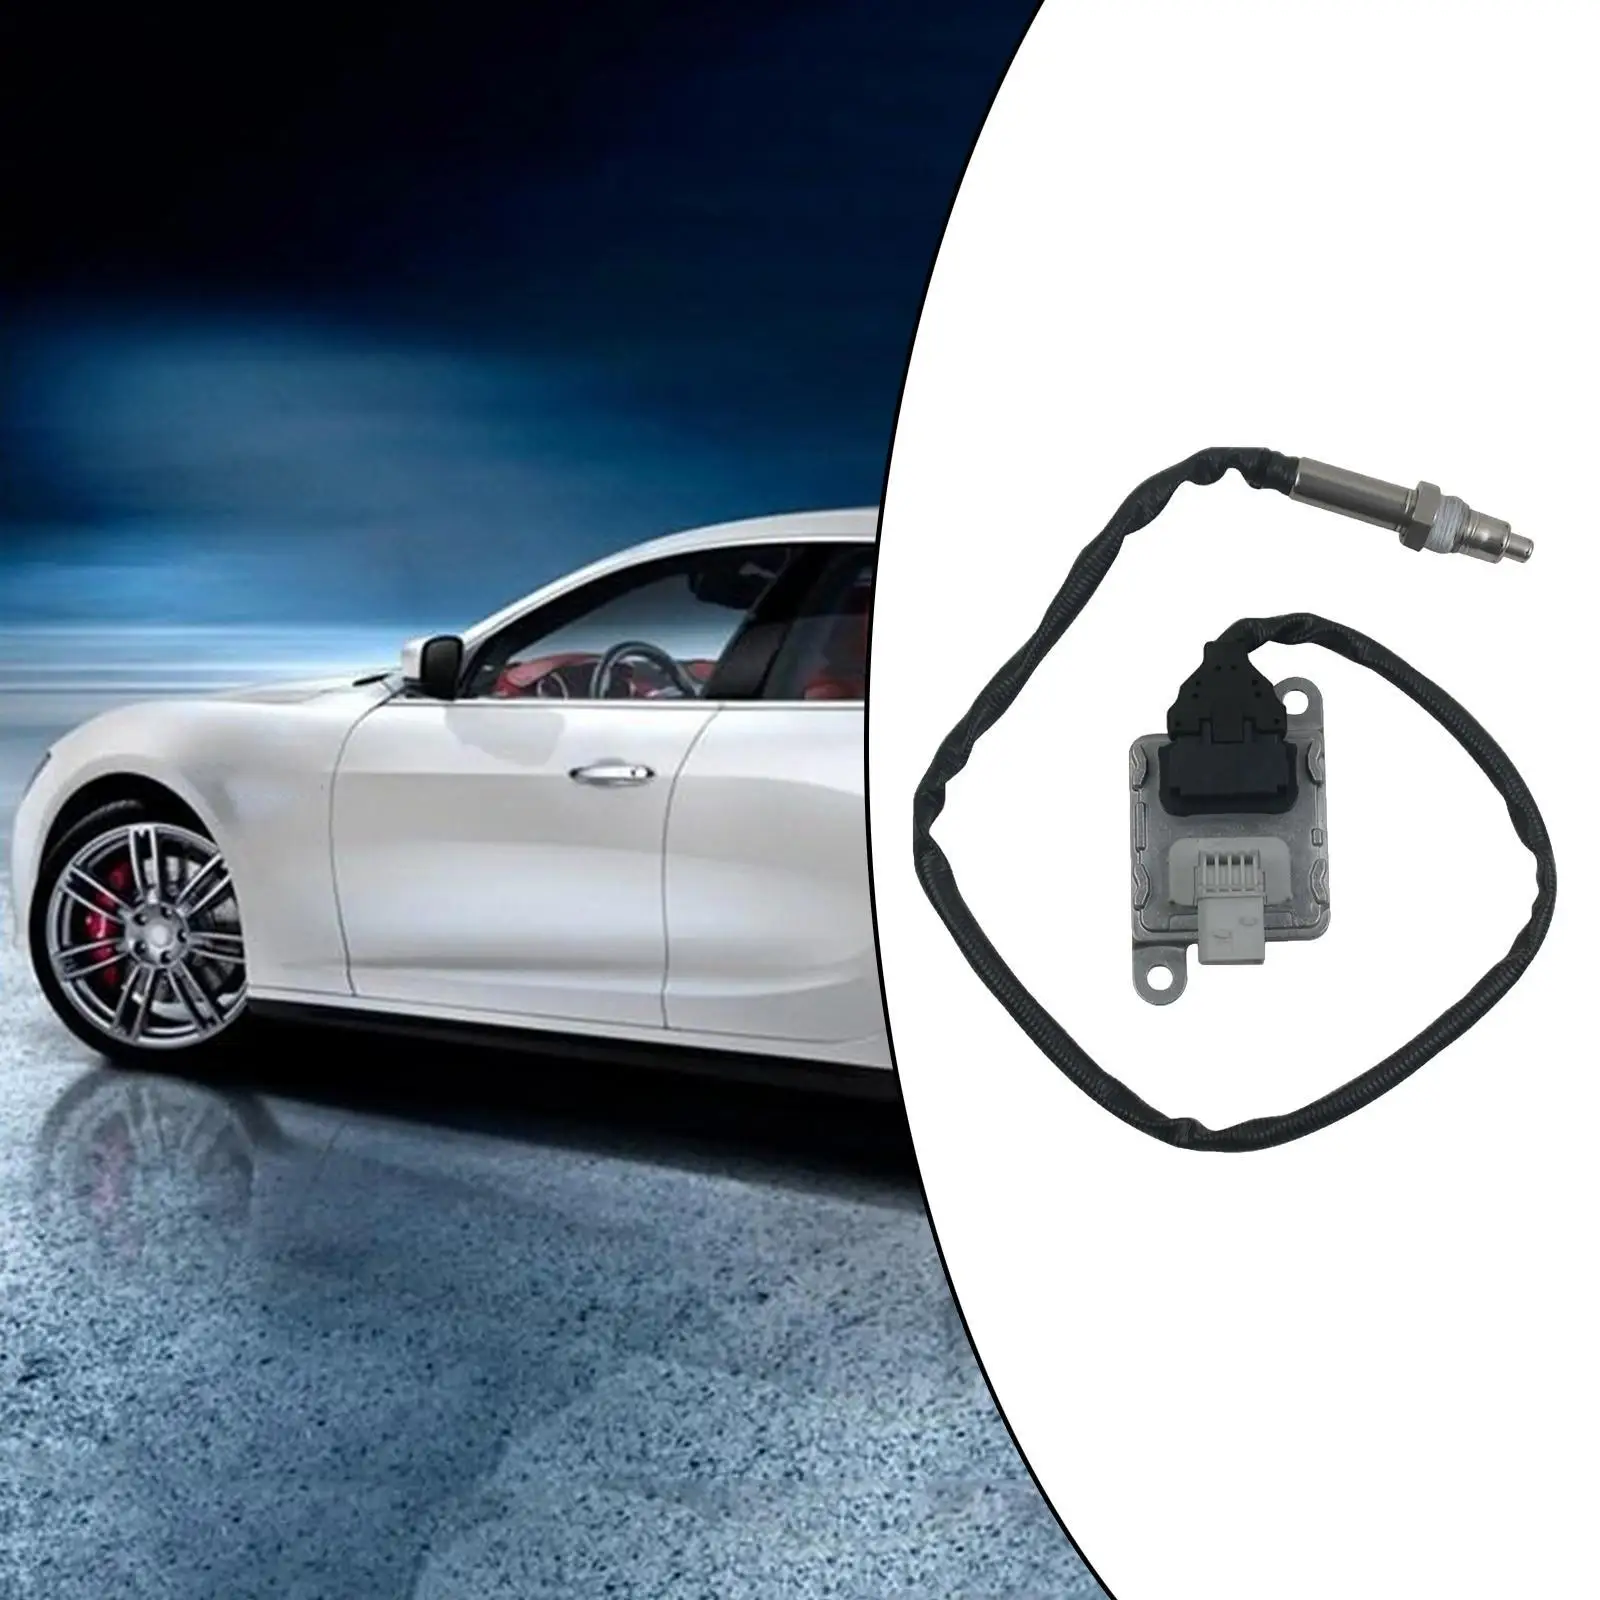 Nox Oxygen Sensor Professional Accessory for Car, Simple Installation